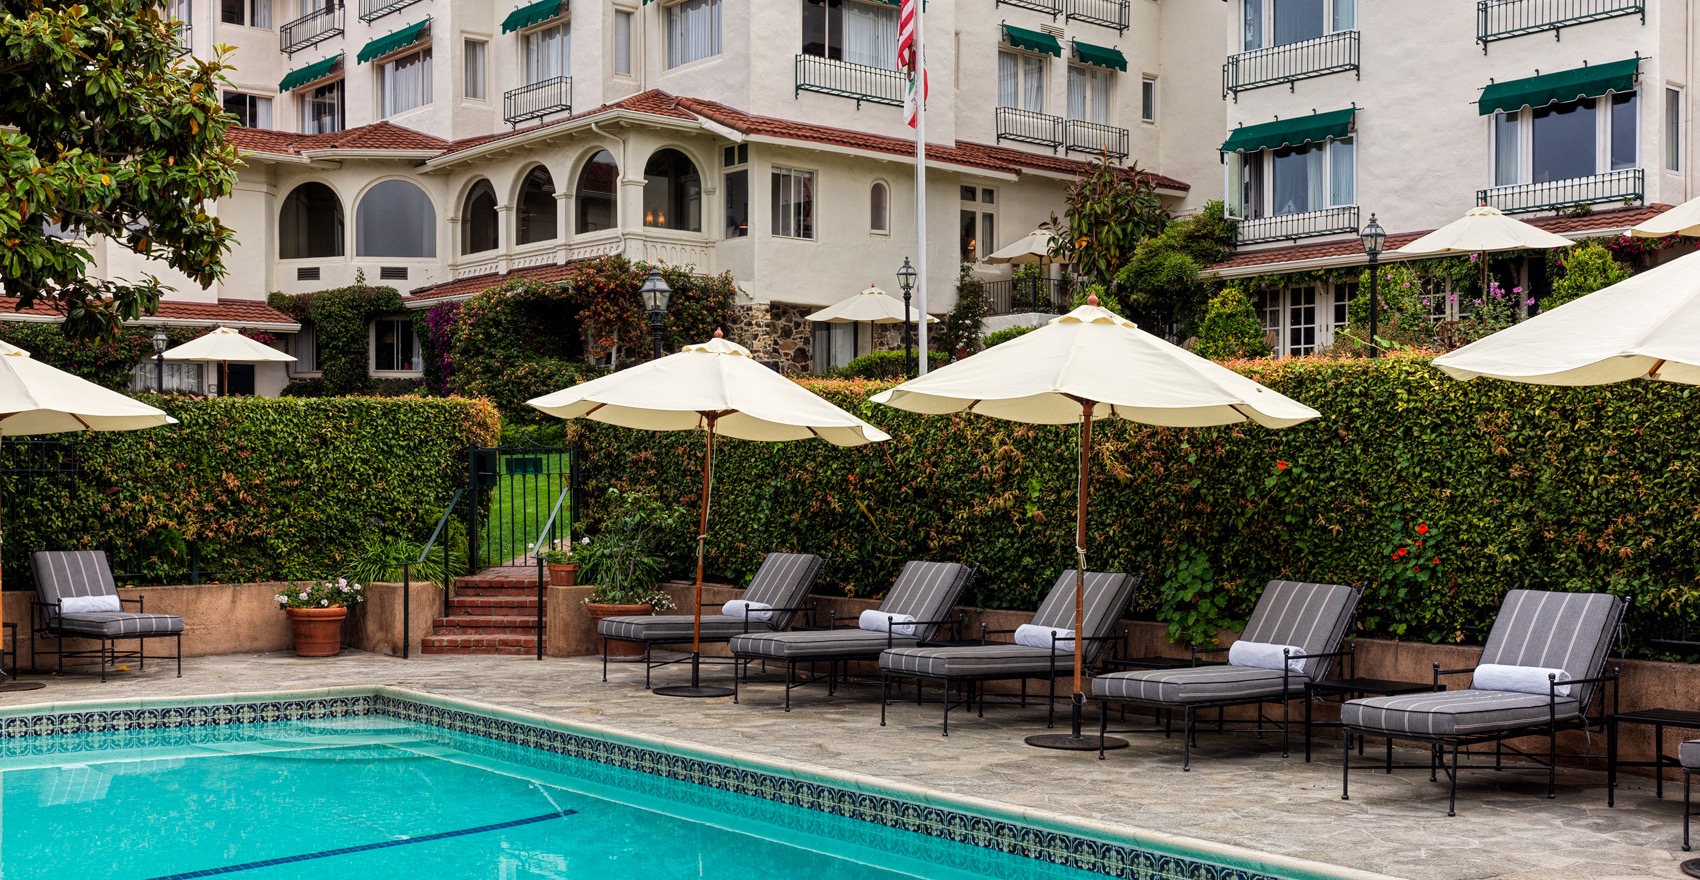 La Playa Hotel | Carmel Hotel & Event Venue